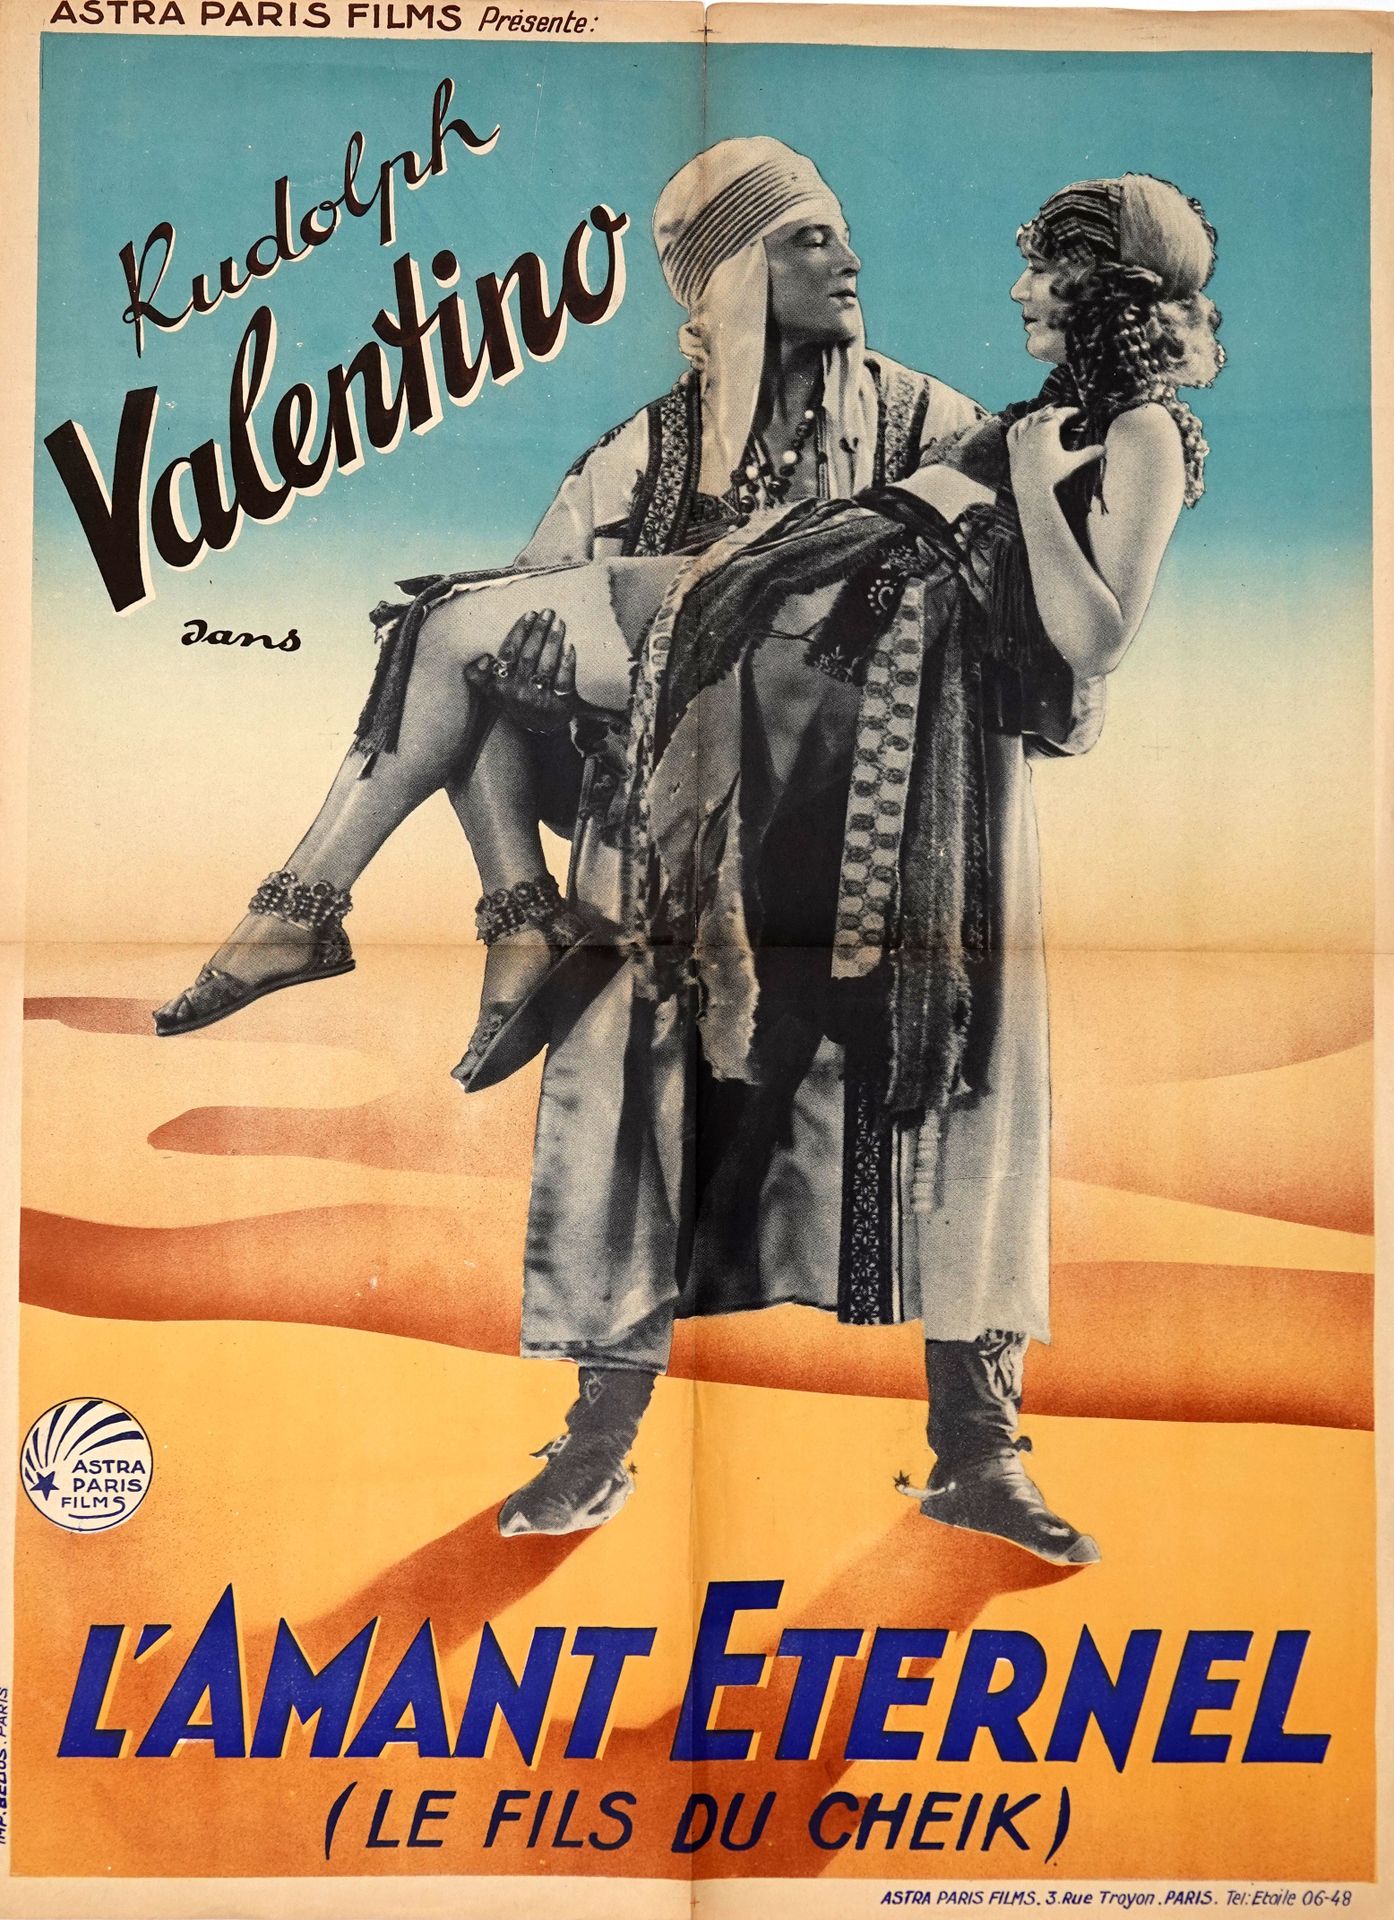 Null L'AMANT ETERNEL, 1926

De George Fitzmaurice

Avec Rudolph Valentino, Vilma&hellip;